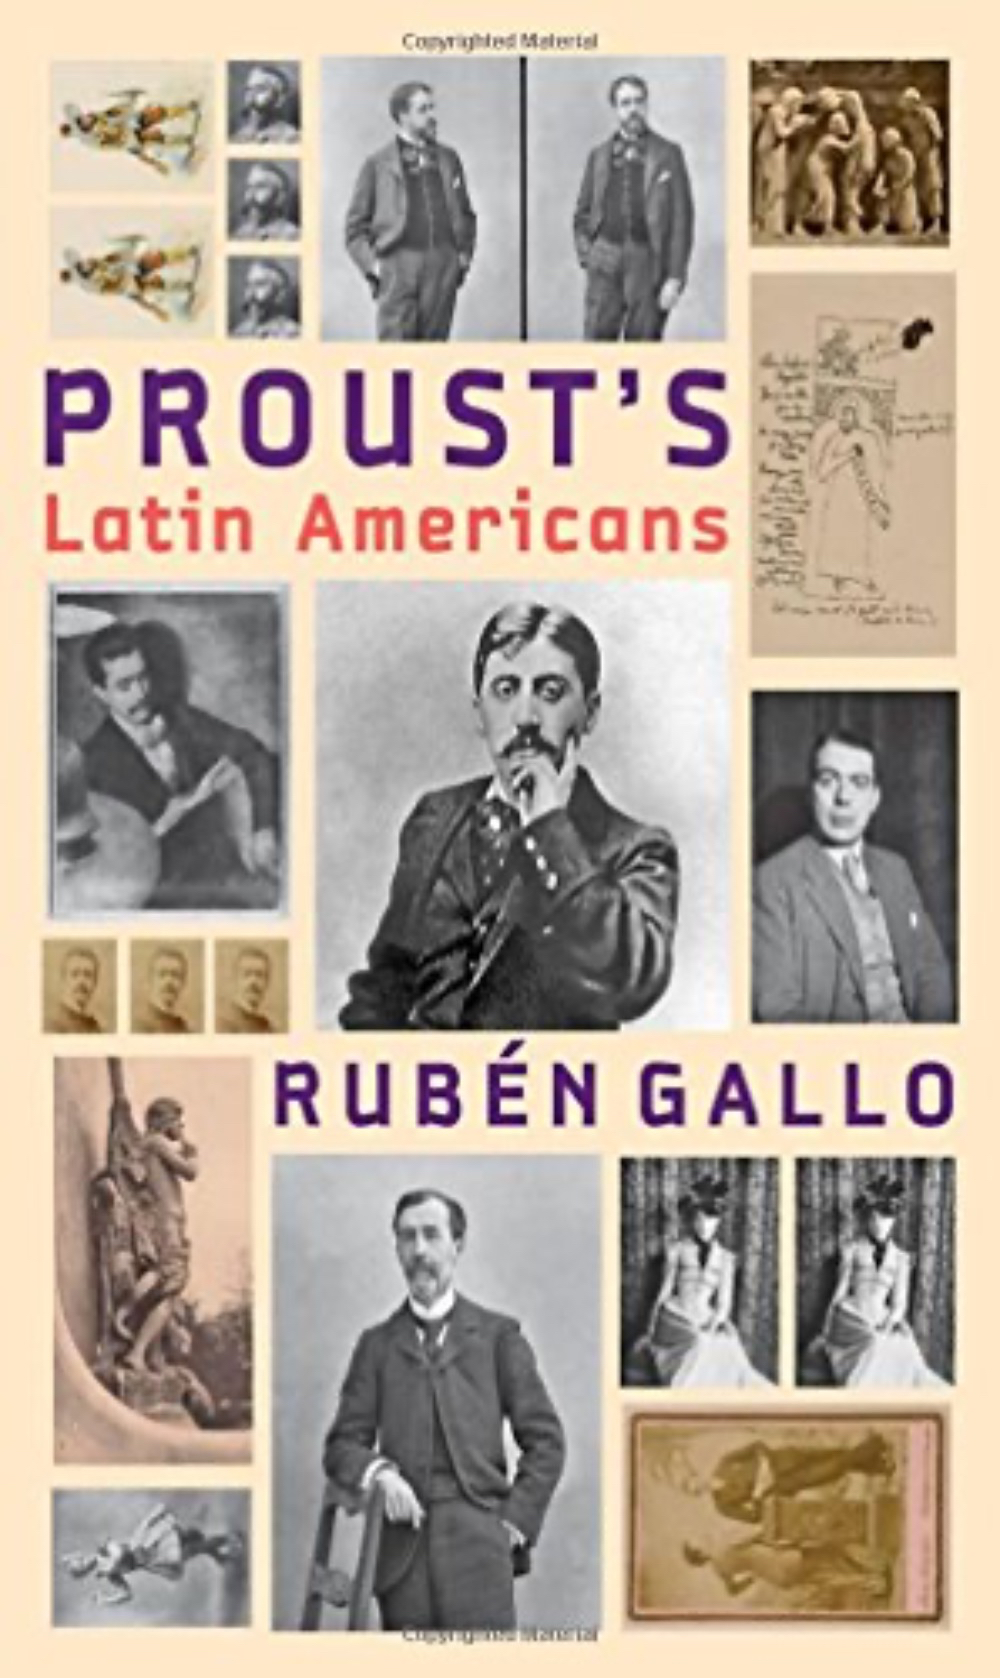 Proust's Latin Americans by Ruben Gallo